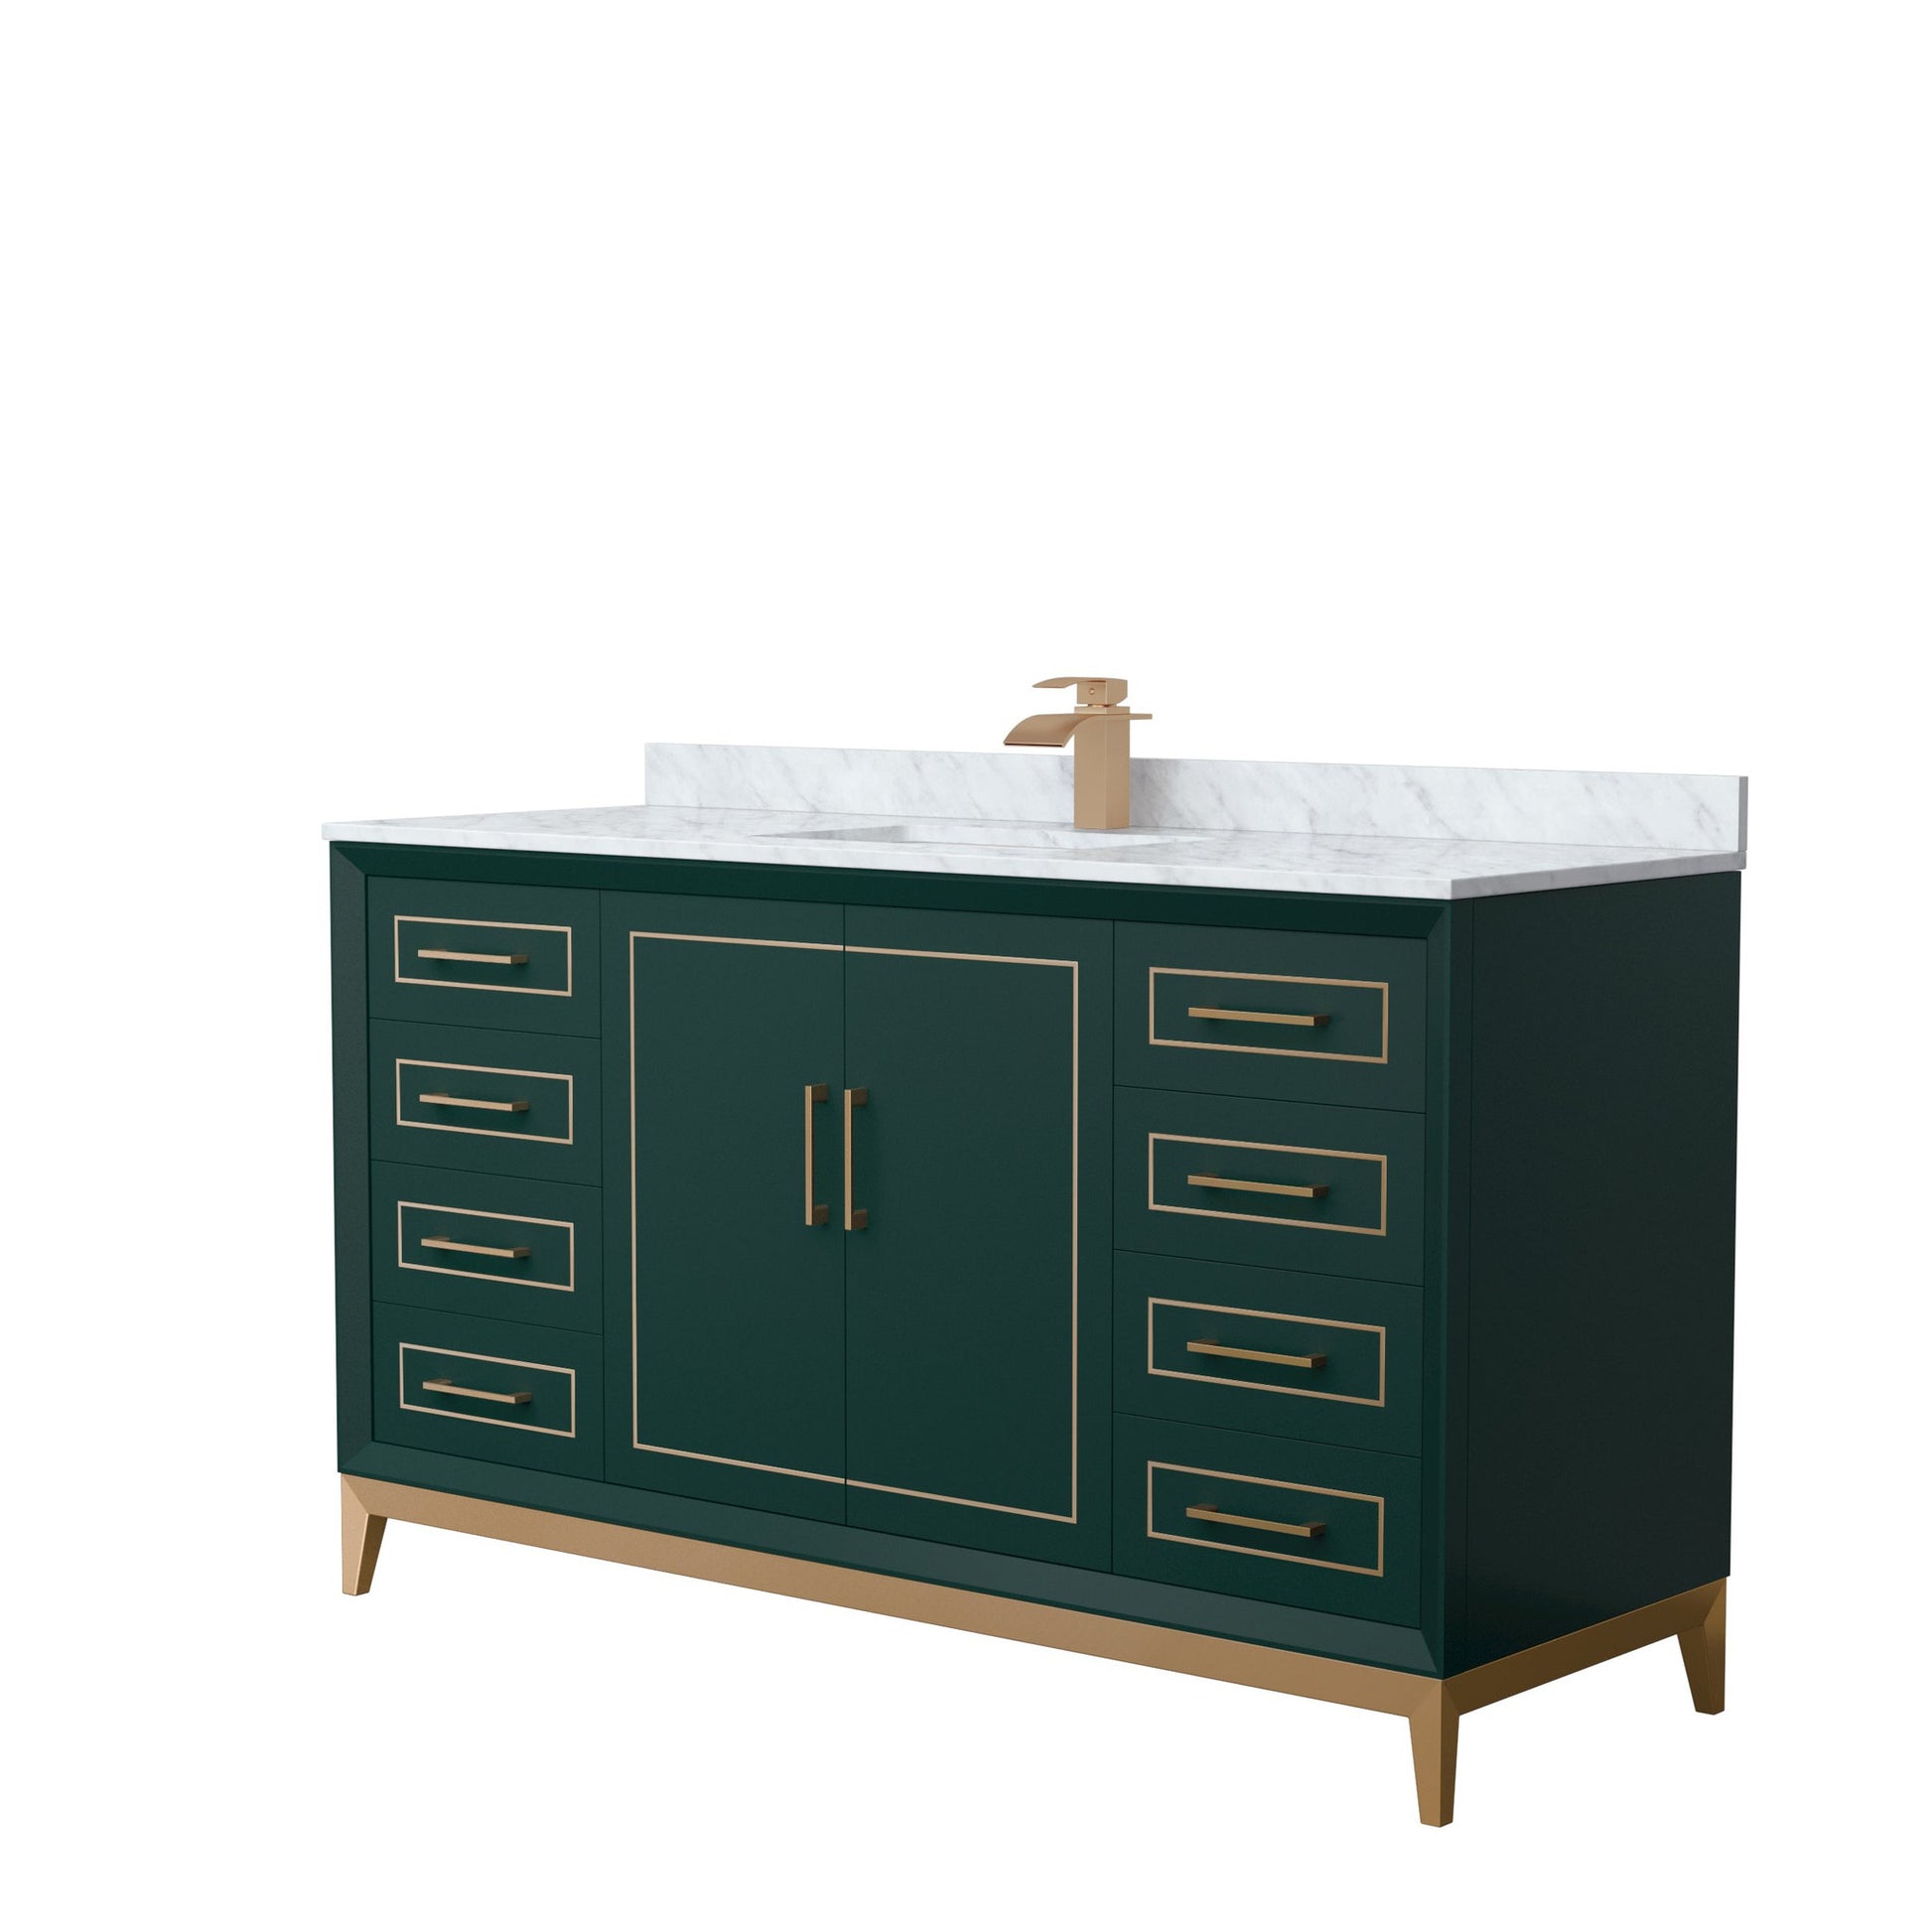 Wyndham Collection Marlena 60" Single Bathroom Vanity in Green, White Carrara Marble Countertop, Undermount Square Sink, Satin Bronze Trim